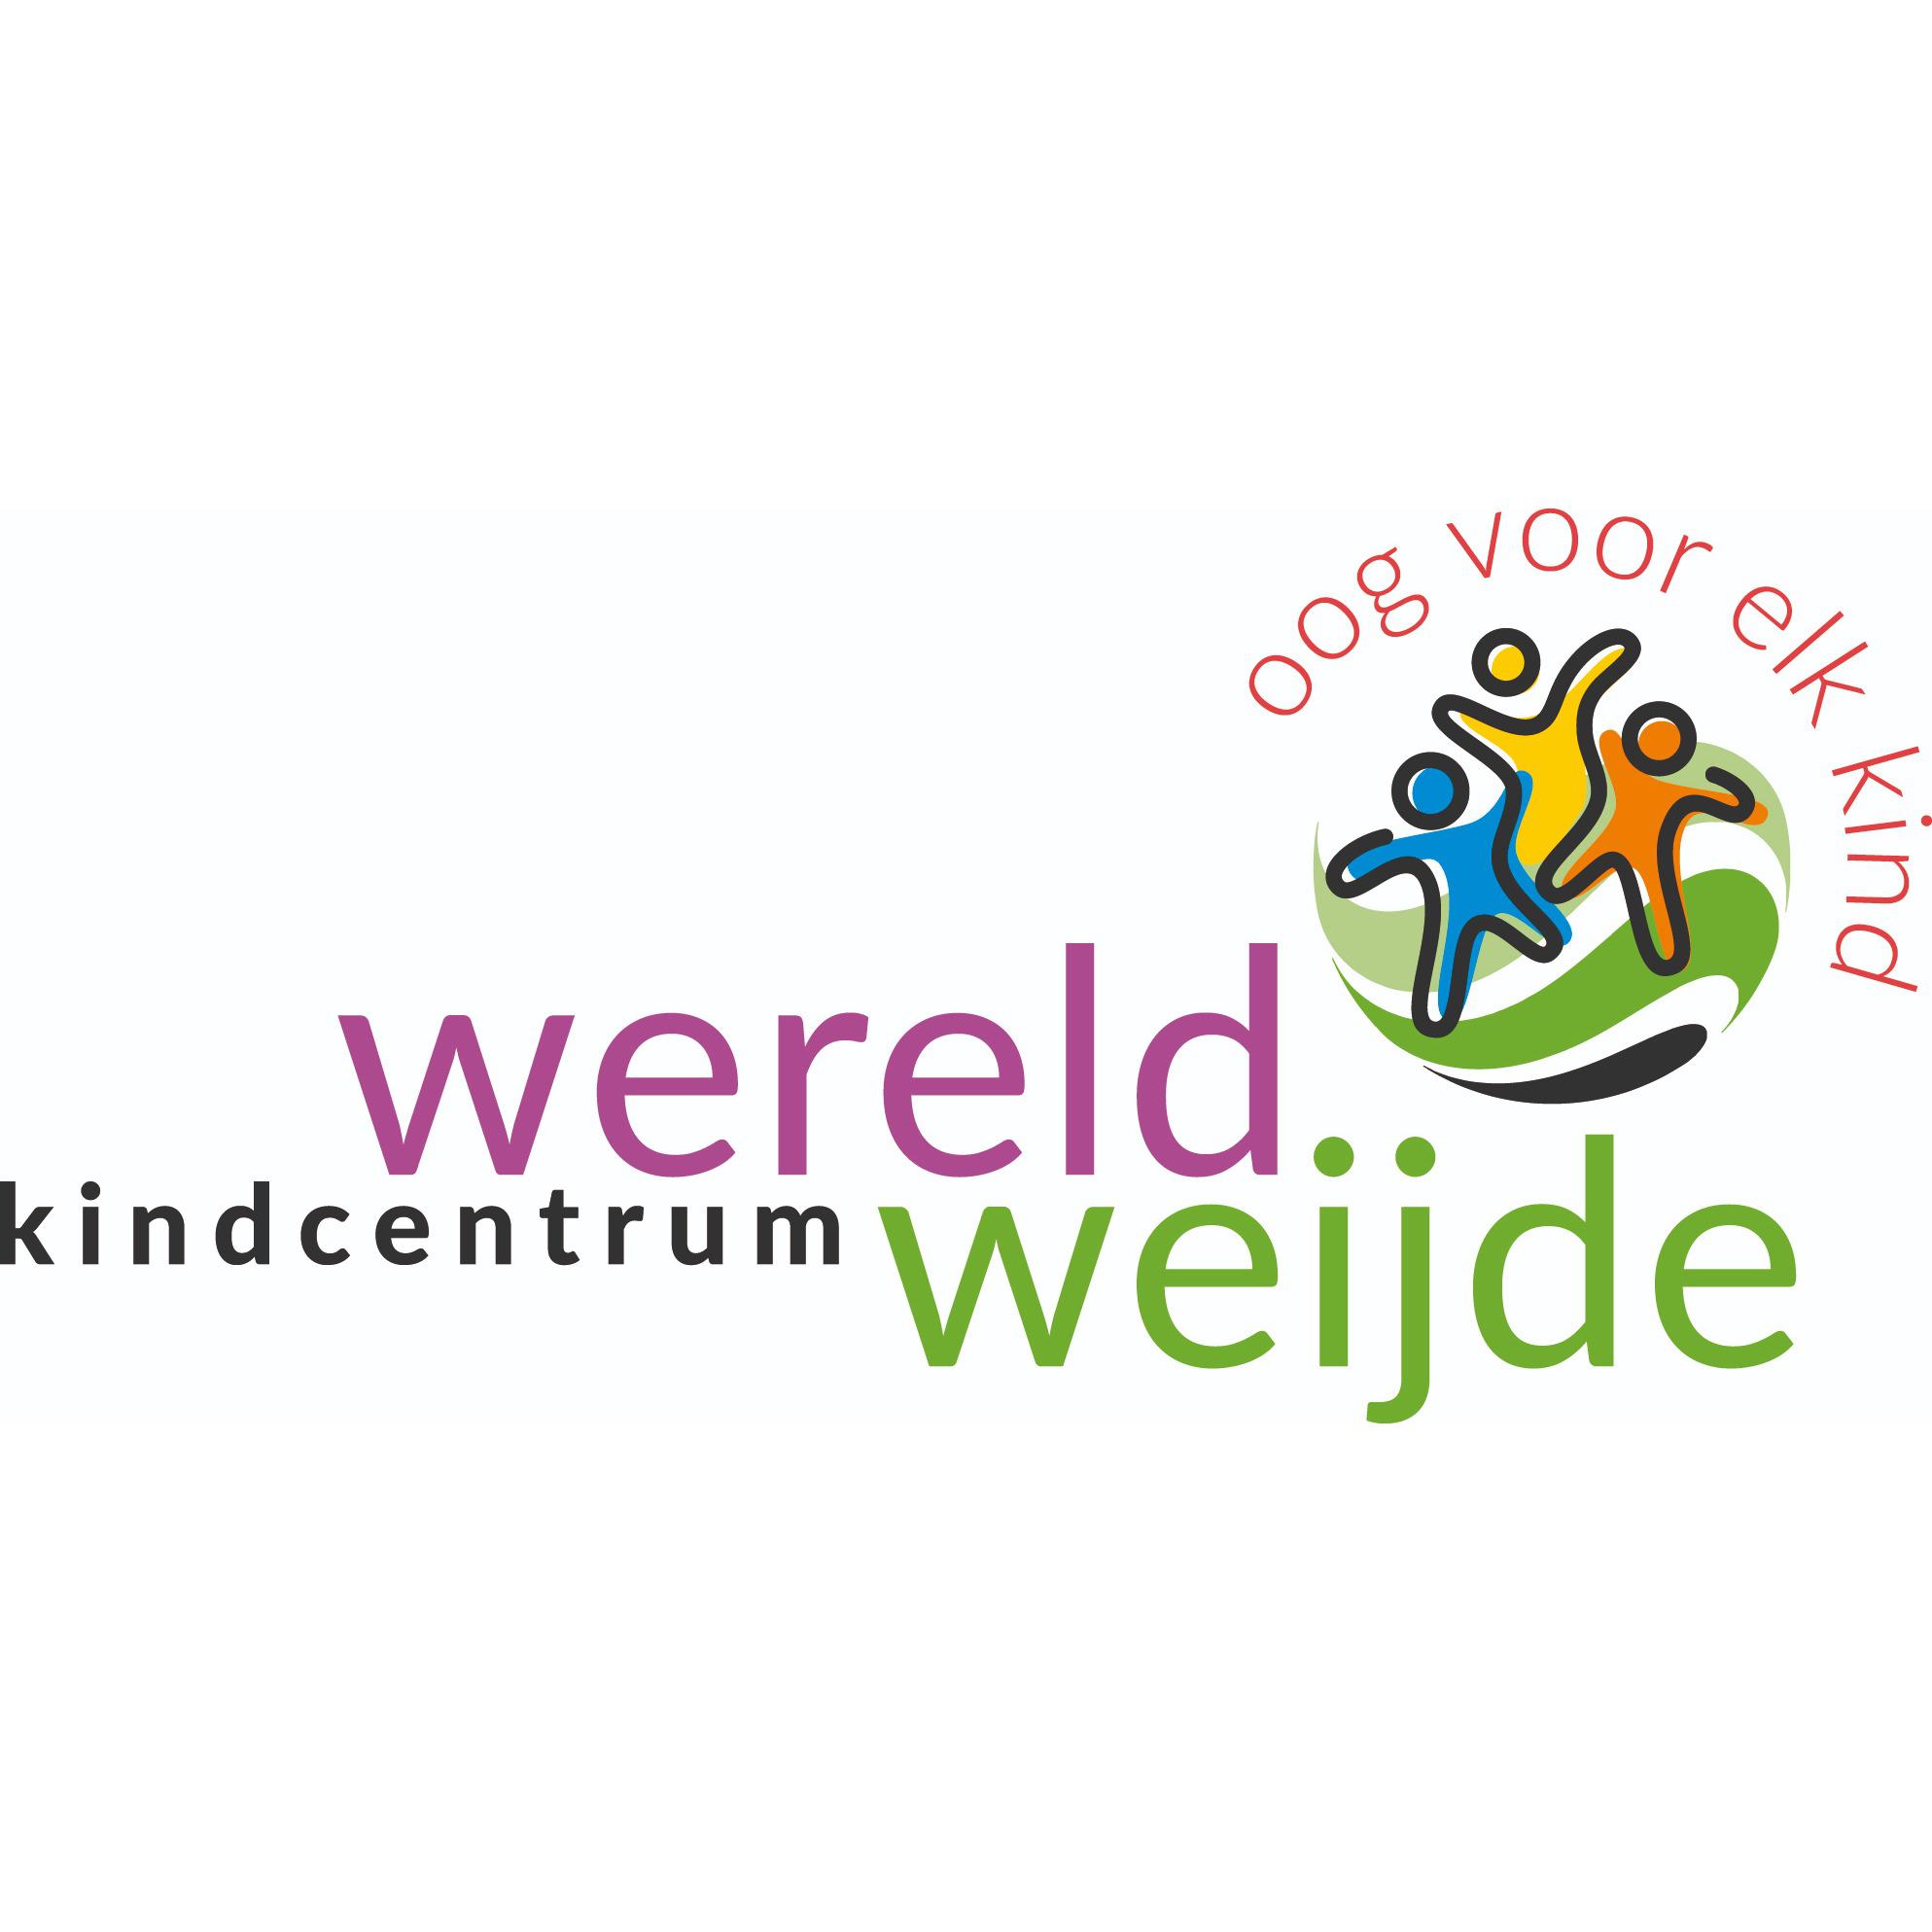 Kindcentrum Wereldweijde - Quadrant Kindercentra Logo